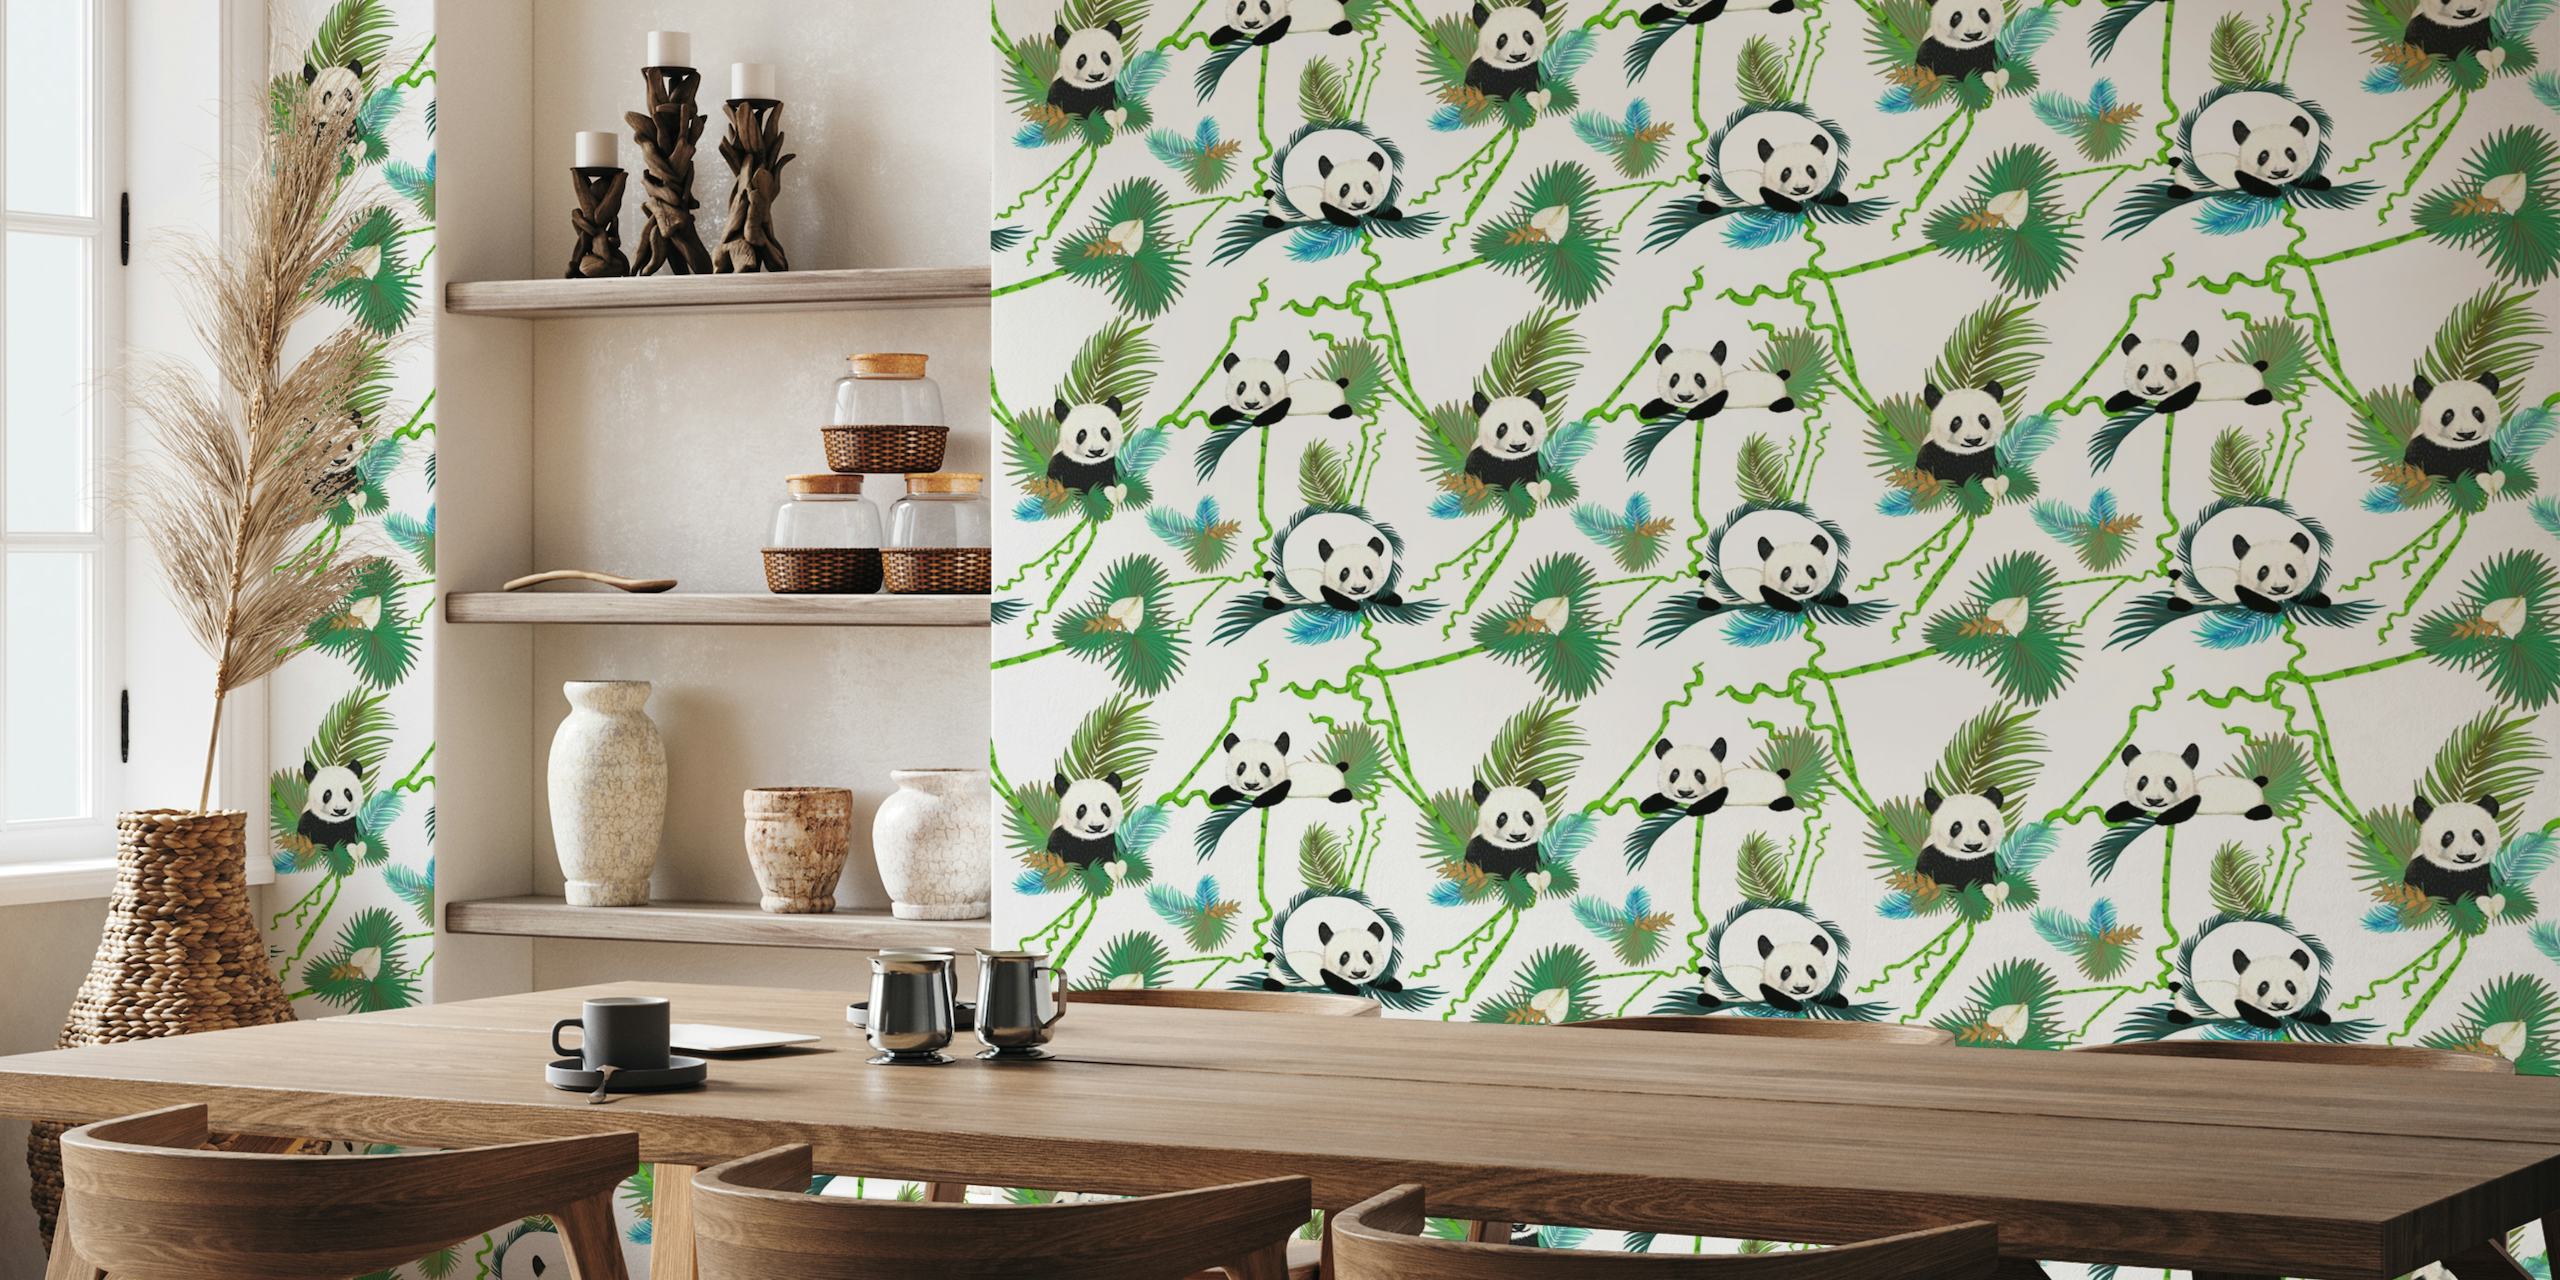 Bamboo and panda ταπετσαρία